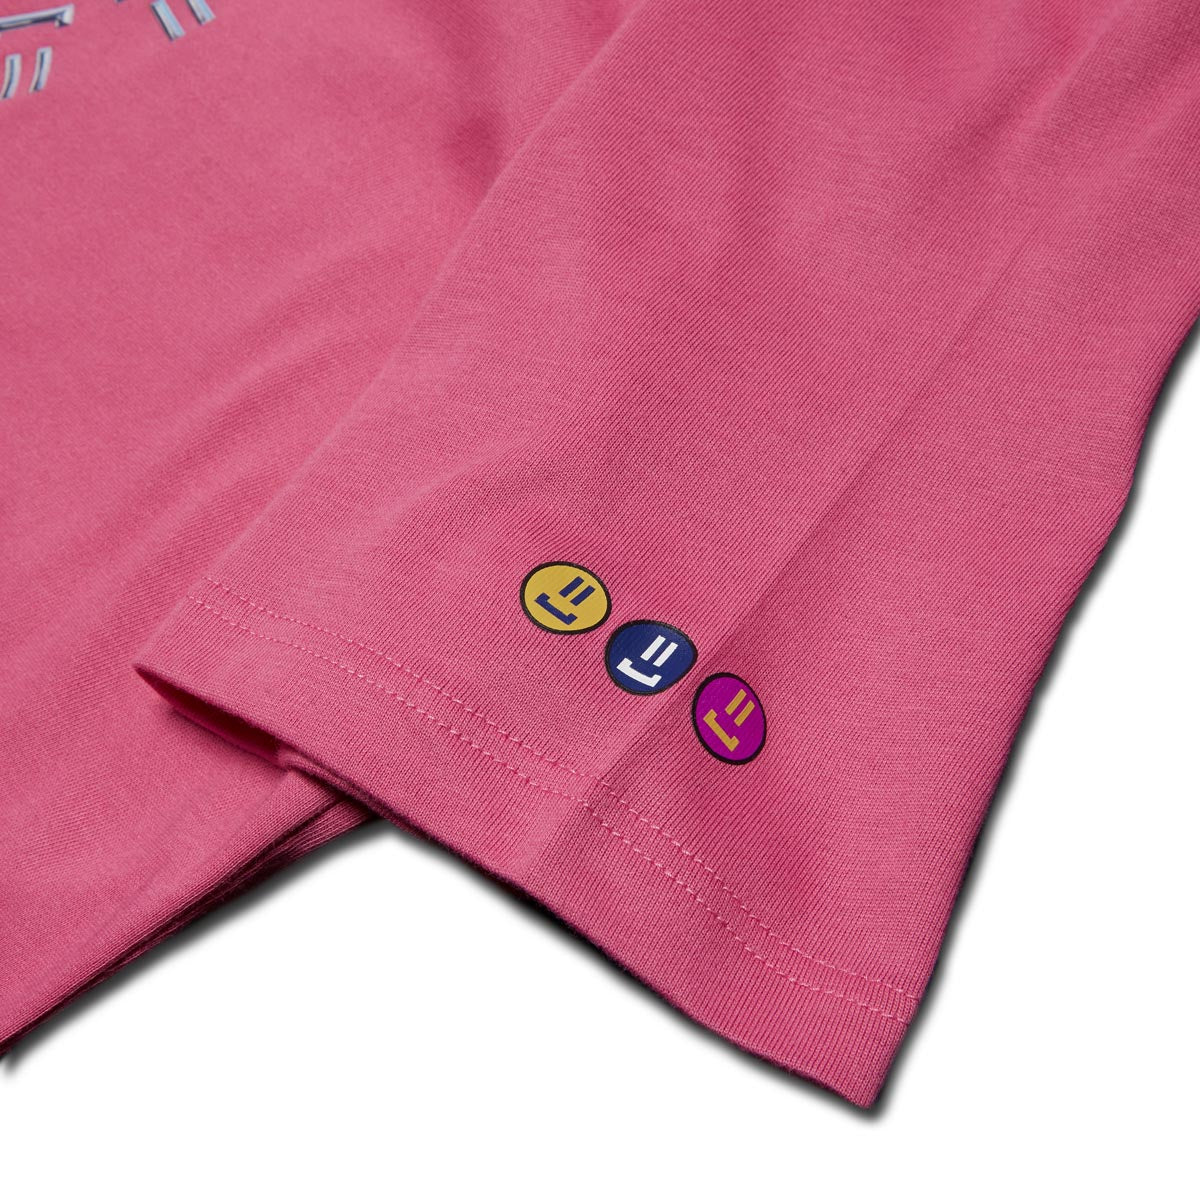 Nike SB Womens x Rayssa Leal Premium T-Shirt - Pinkfire II image 3